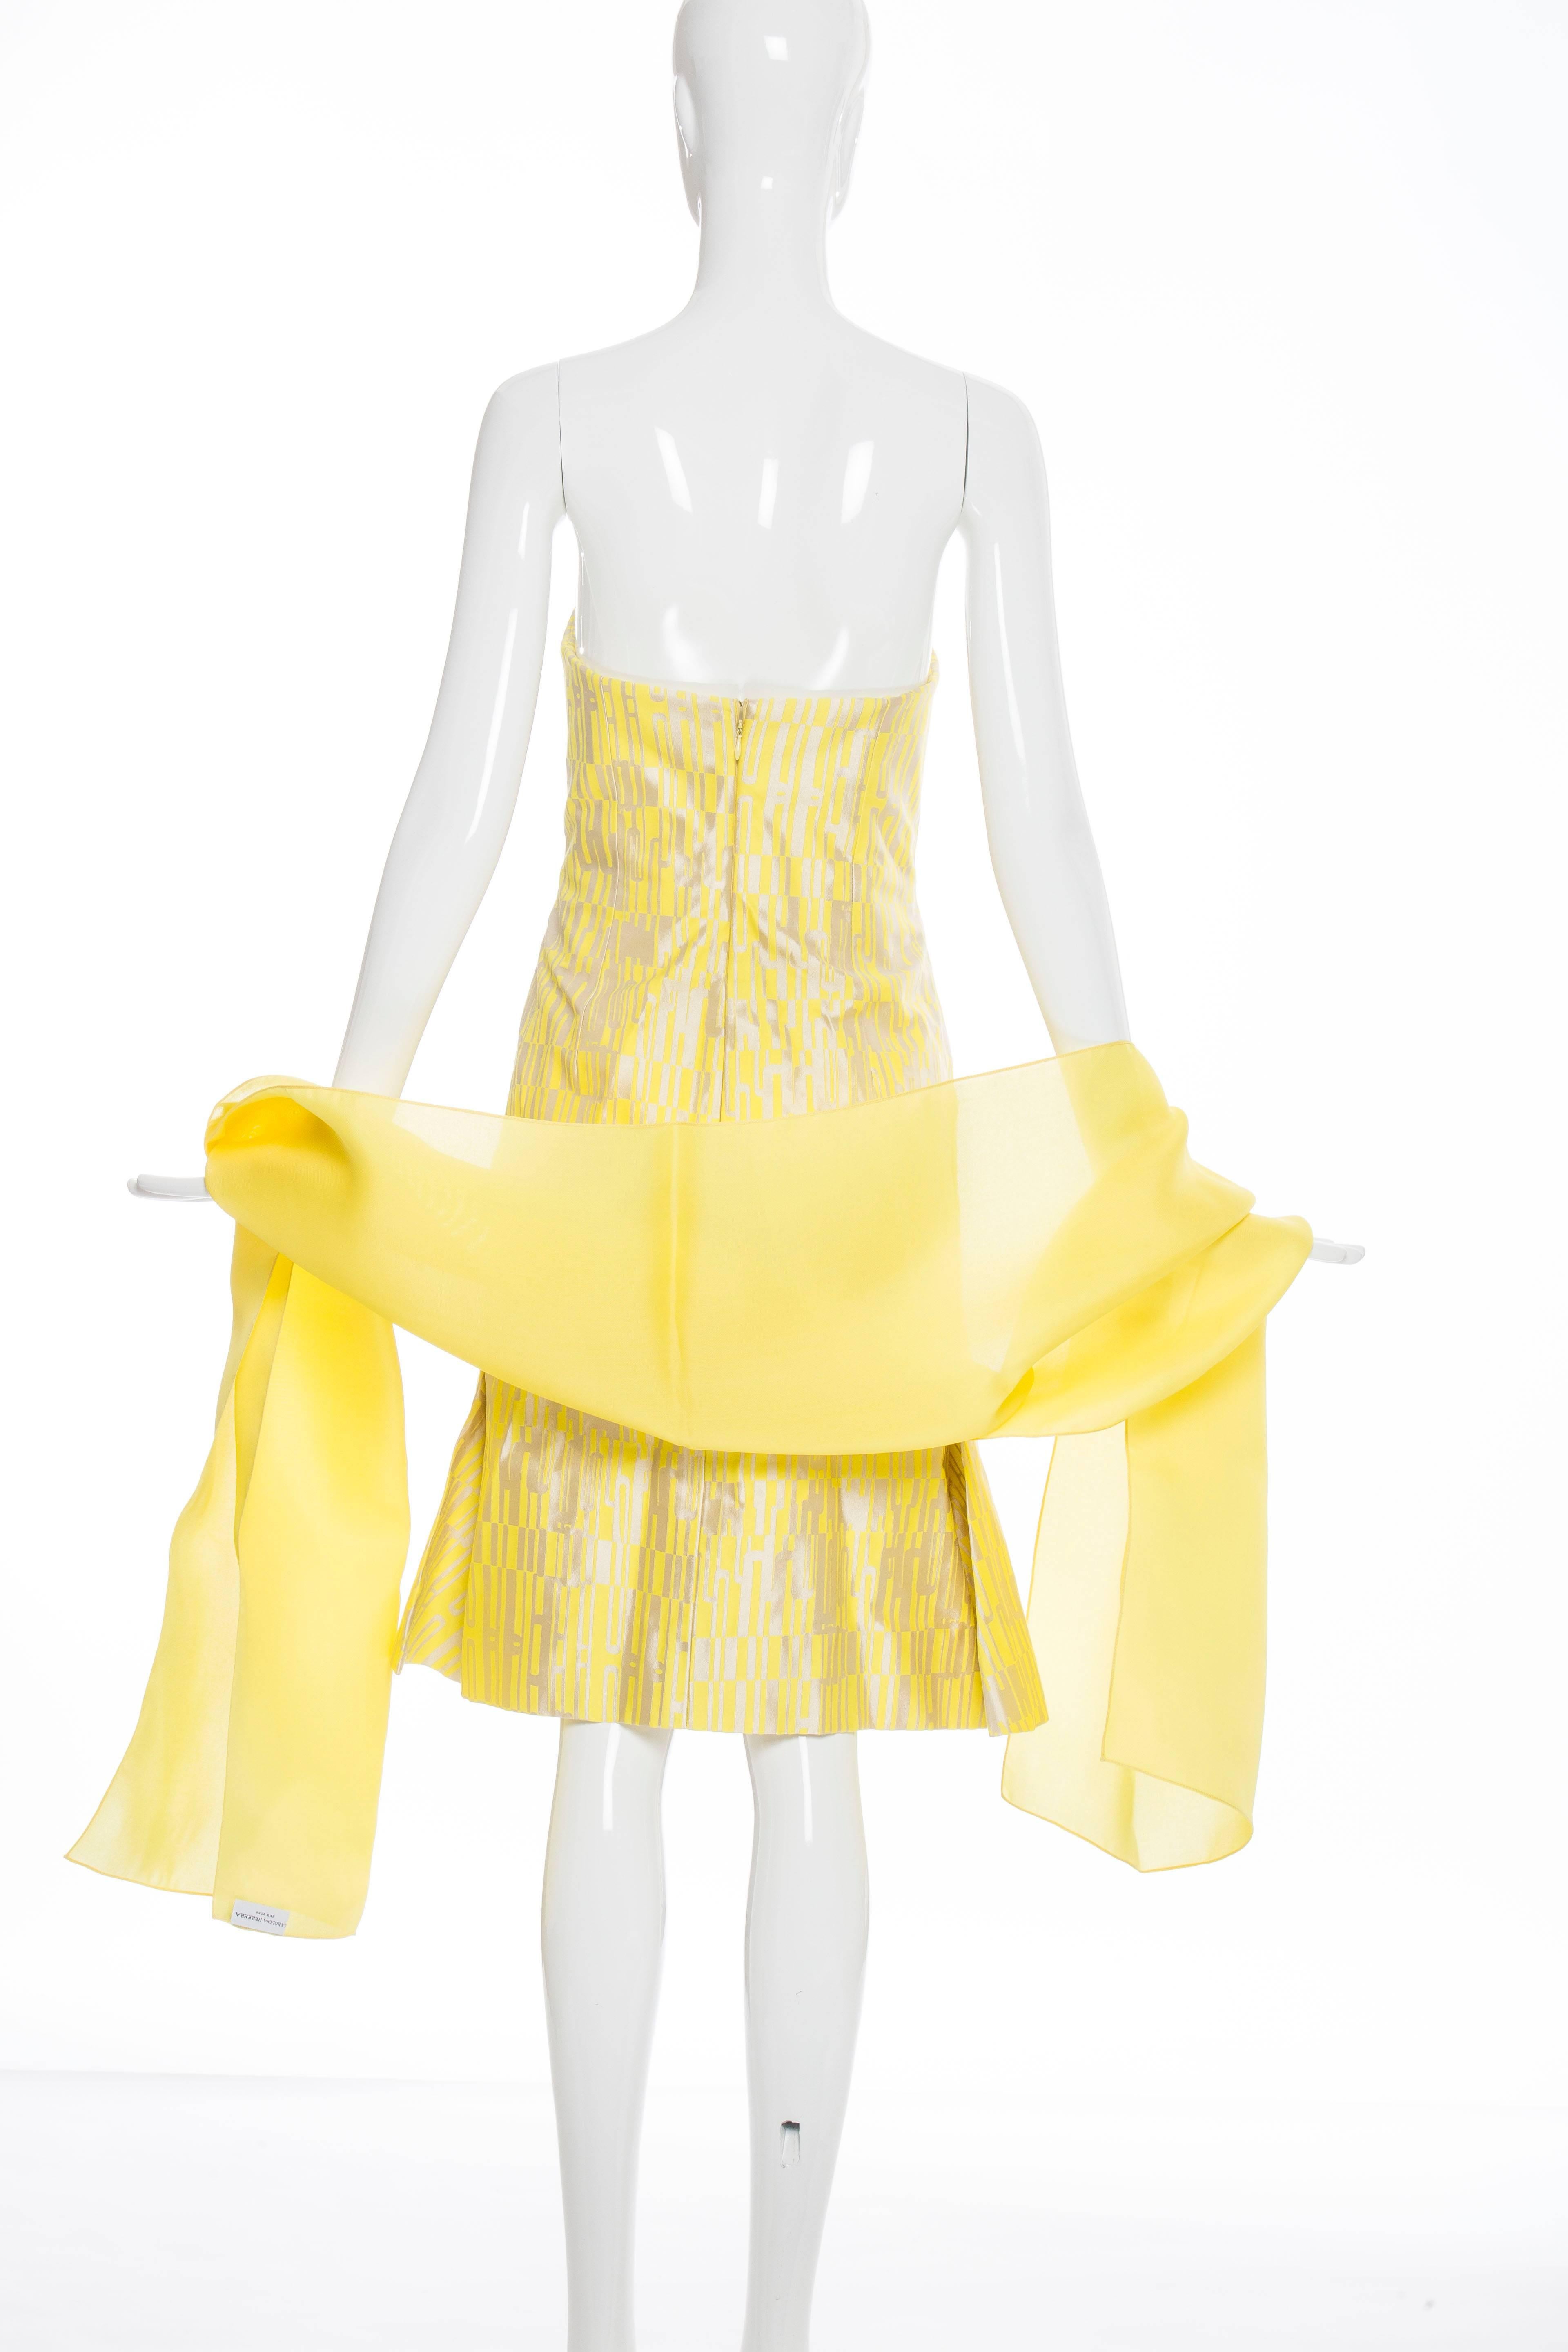 Carolina Herrera Strapless Dress Spring 2012 In Excellent Condition For Sale In Cincinnati, OH